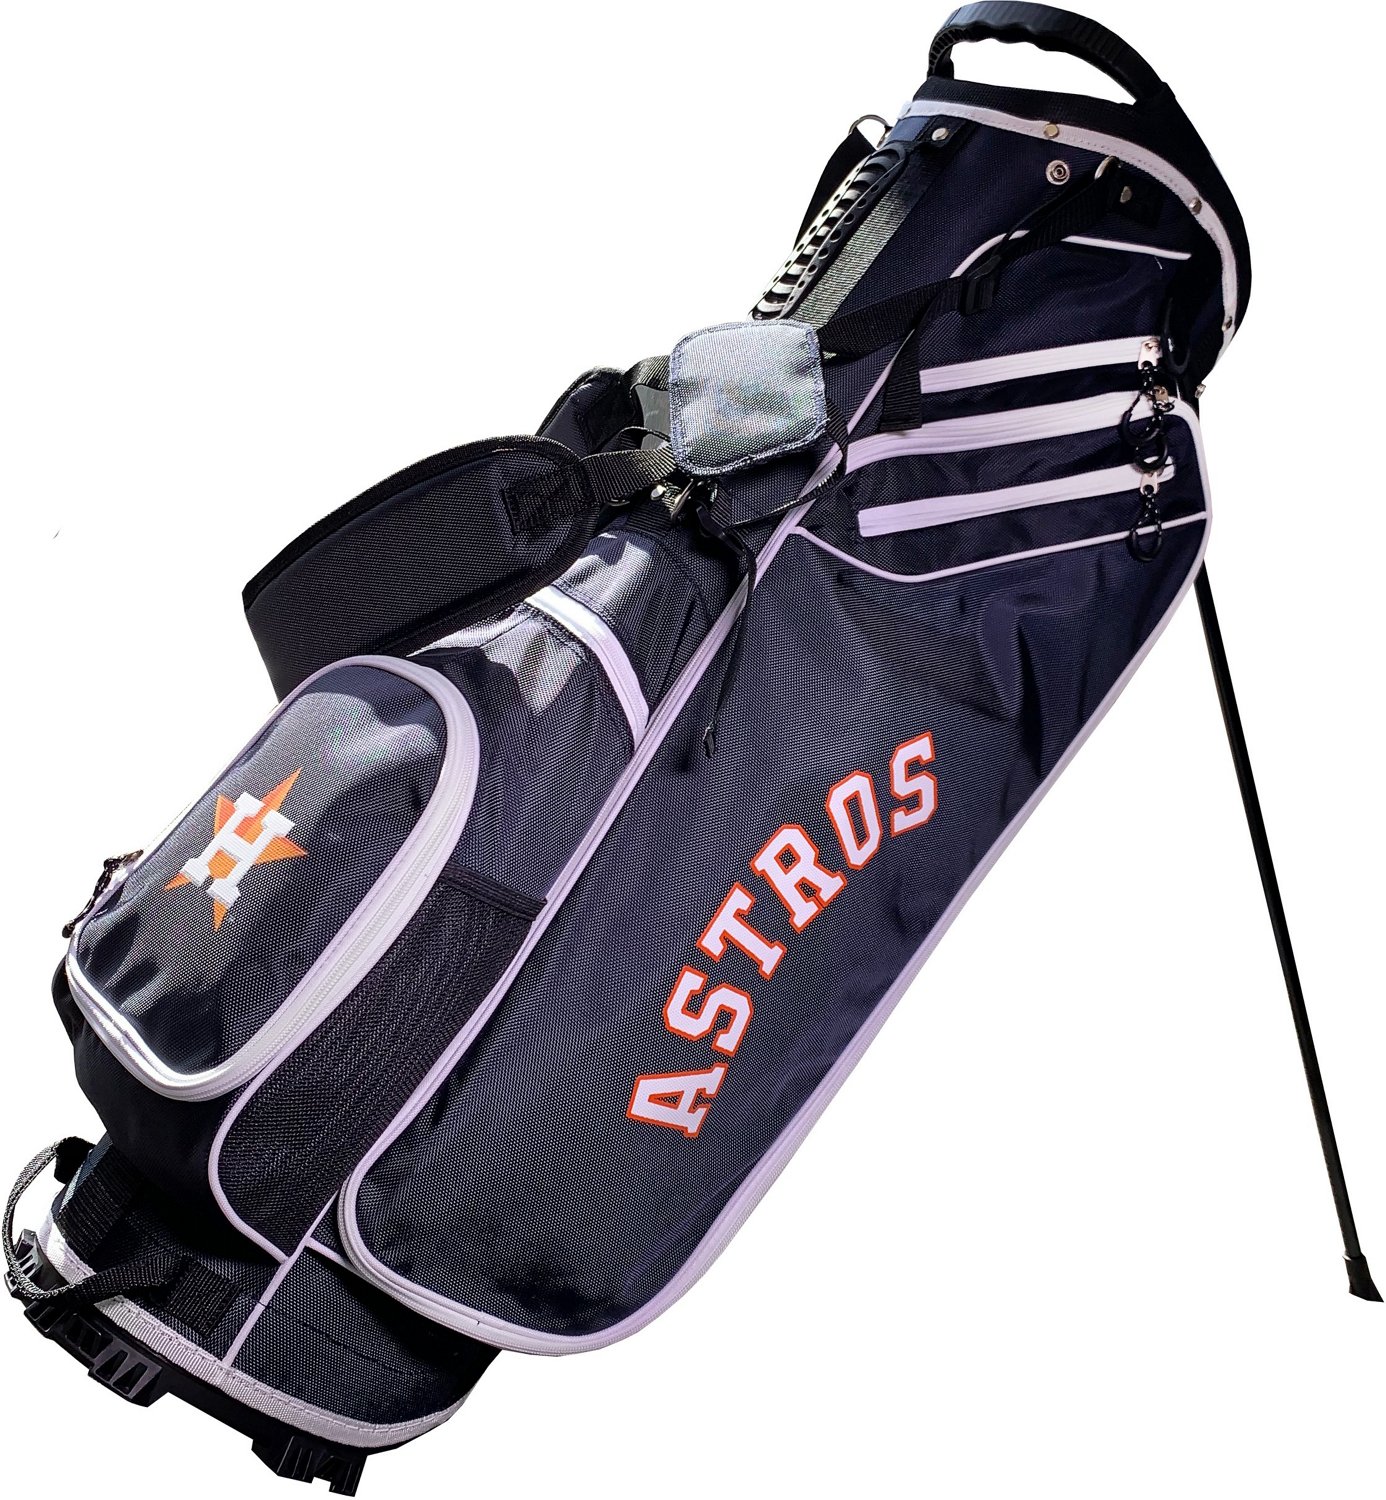 Houston Astros Retro Golf Bag Set SPECIAL ORDER – Jenny's Gift Baskets